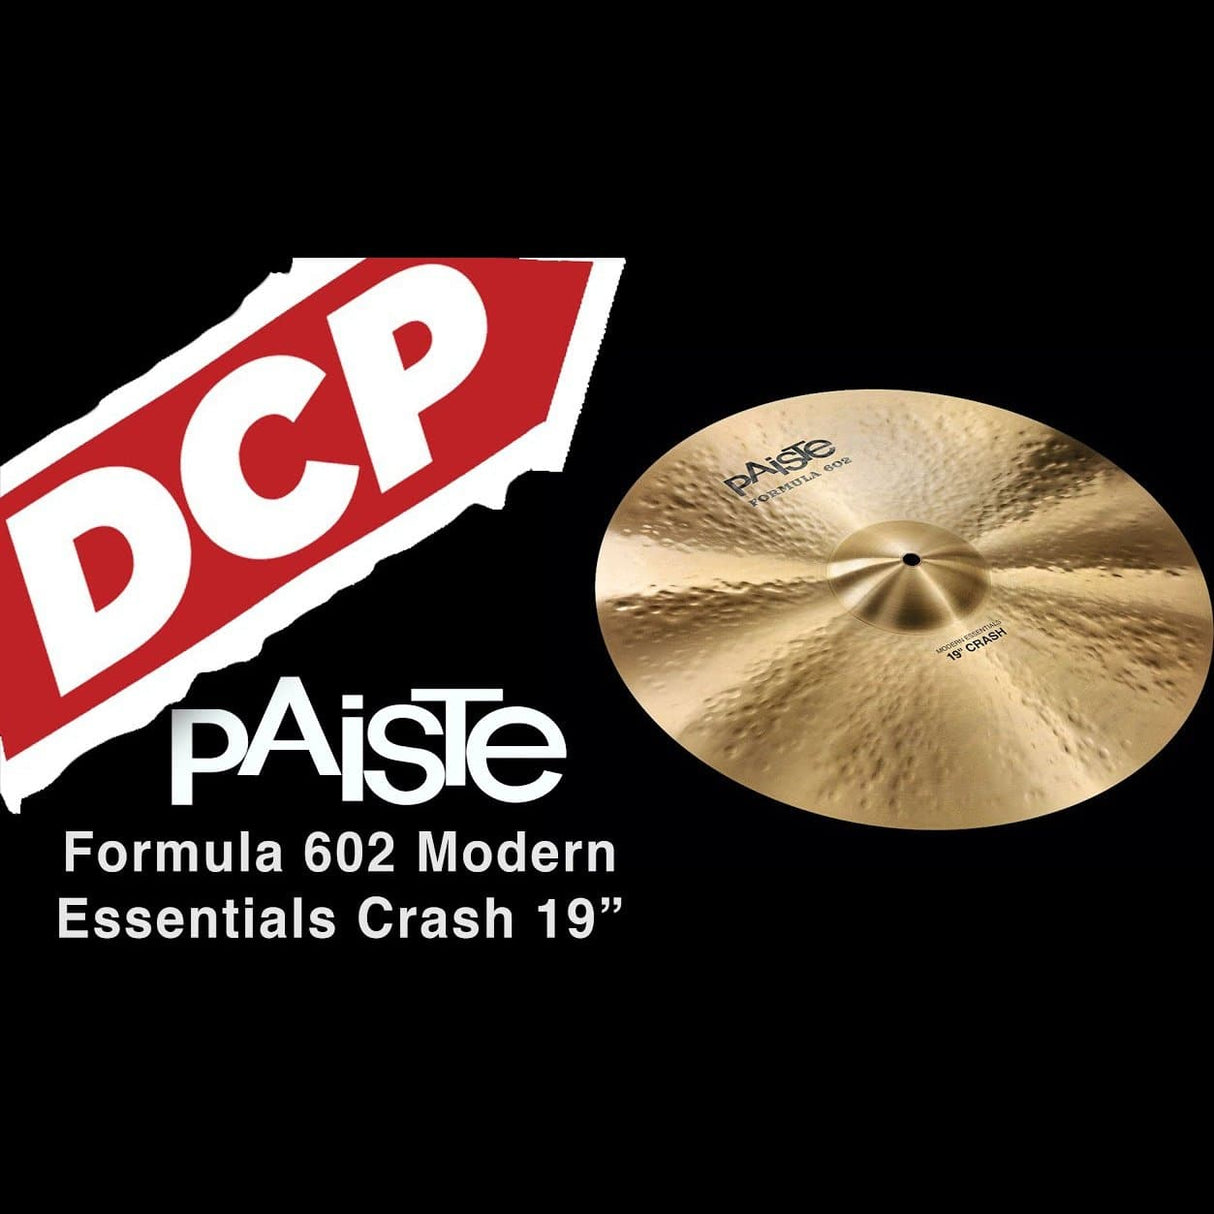 Paiste Formula 602 Modern Essentials Crash Cymbal 19"